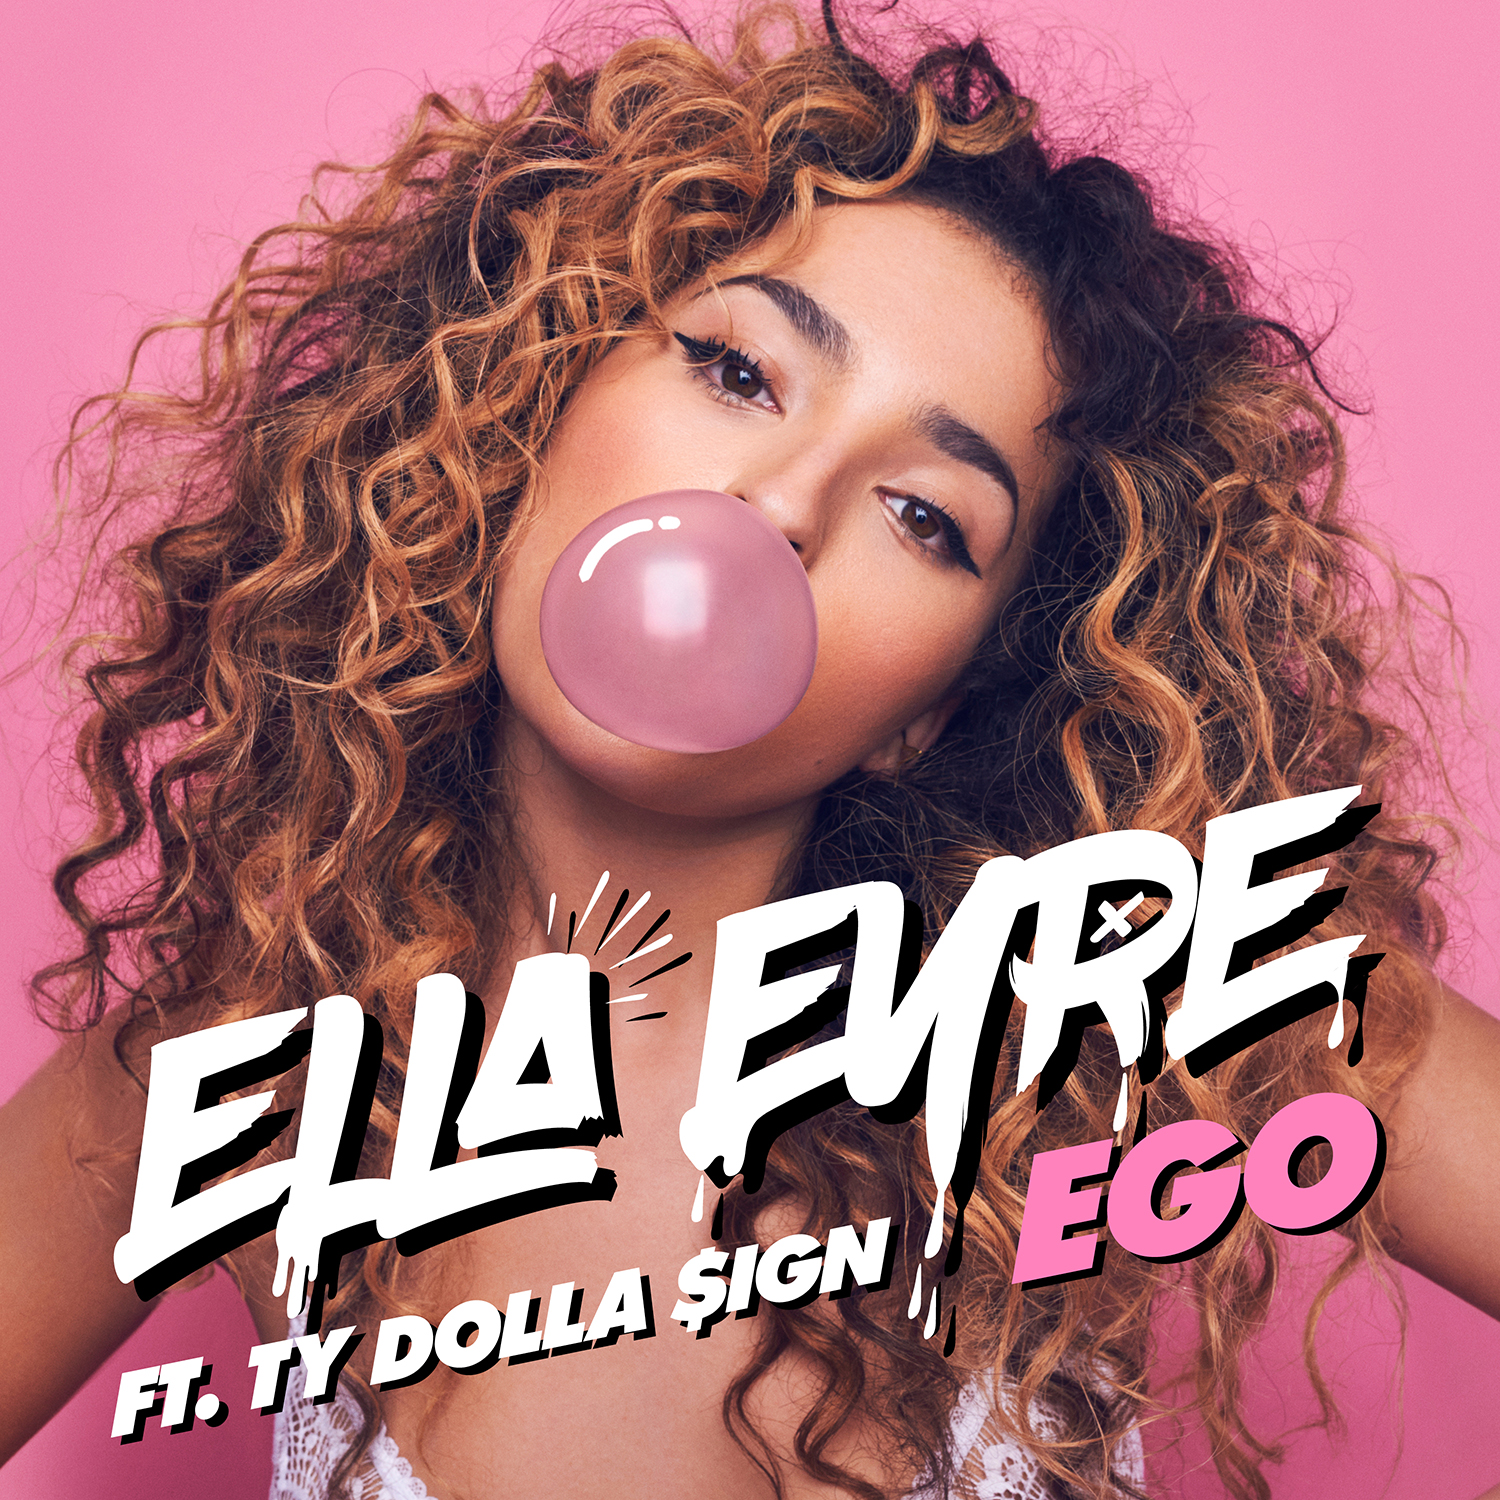 Ella Eyre powraca z nowym singlem Ego!